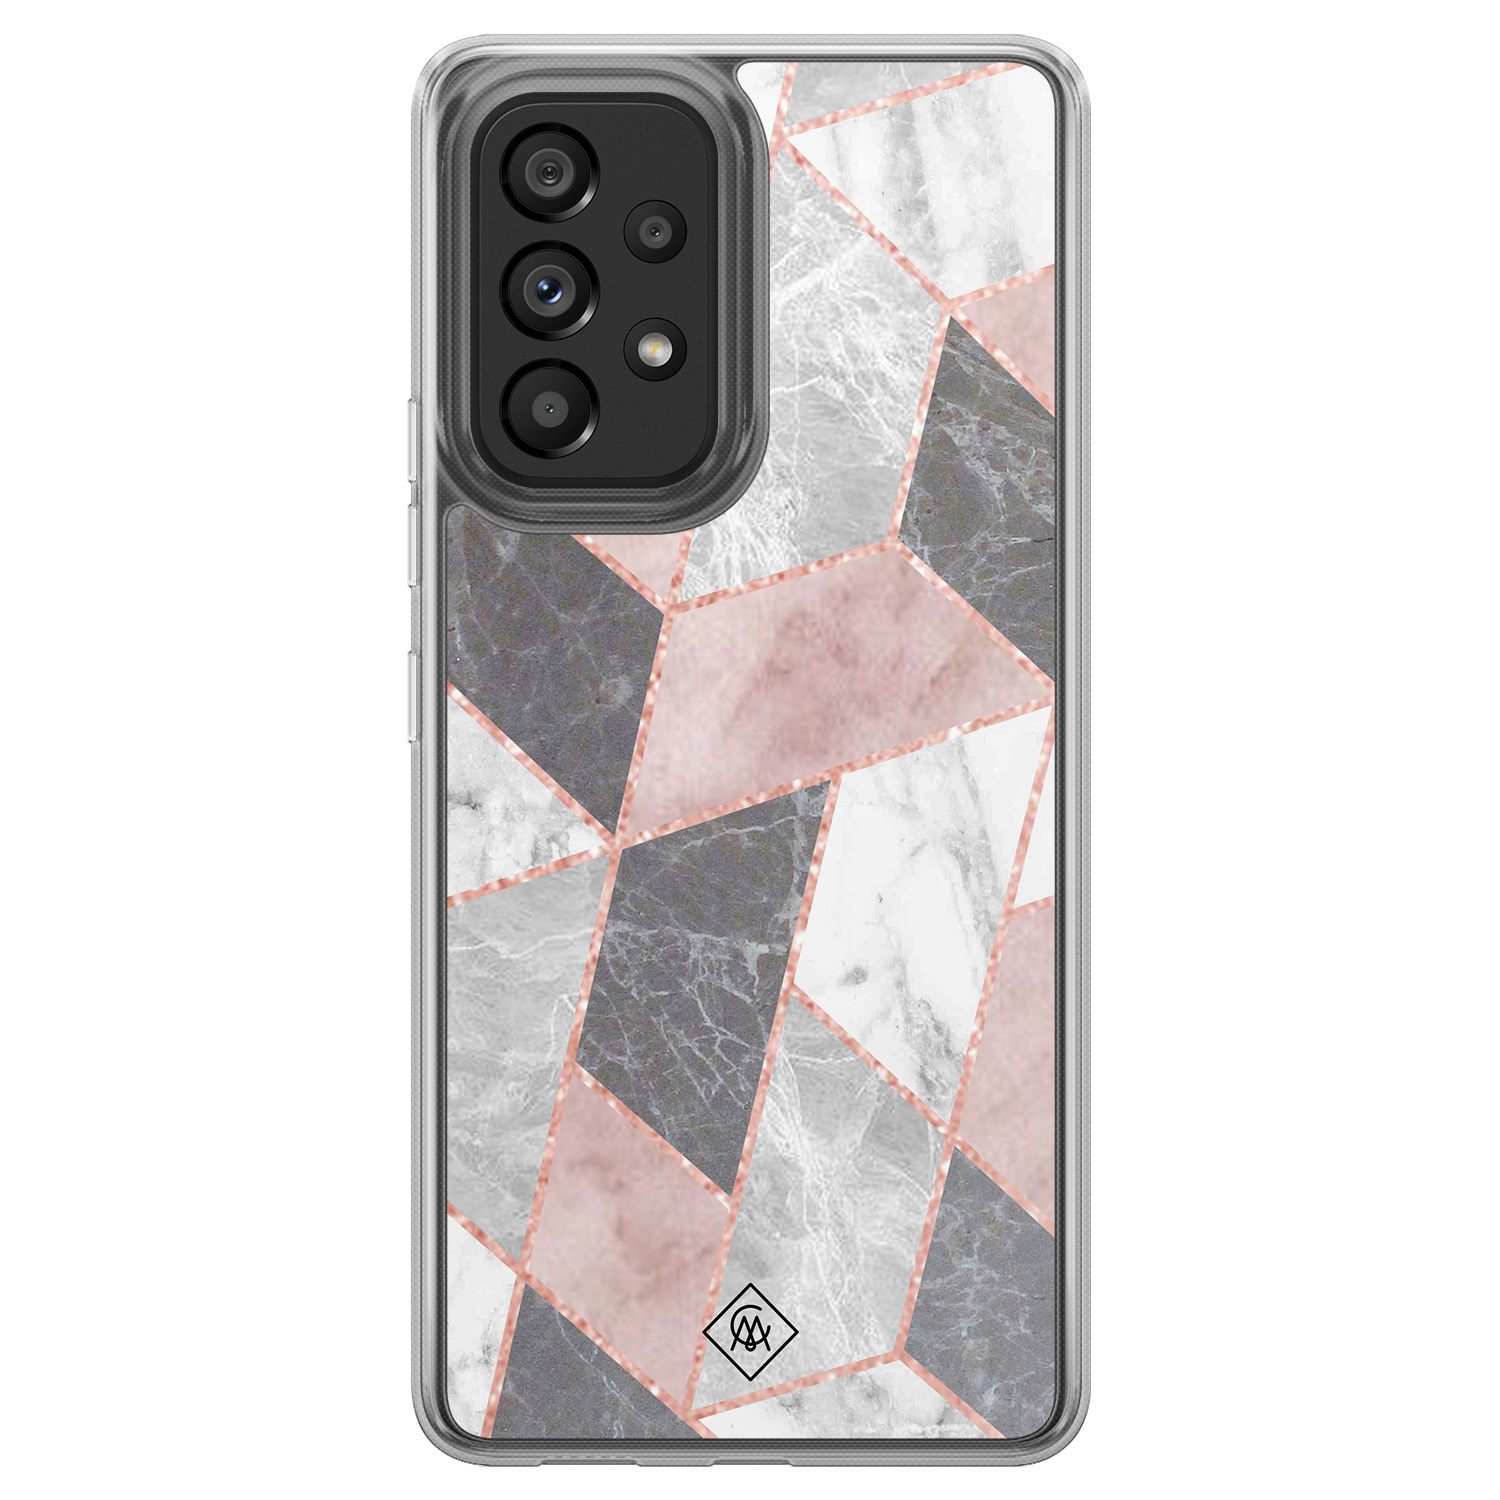 Samsung Galaxy A52 5G hoesje siliconen - Stone grid marmer / Abstract marble - Casimoda® 2-in-1 case hybride - Schokbestendig - Geometrisch patroon - Verhoogde randen - Paars, Tran